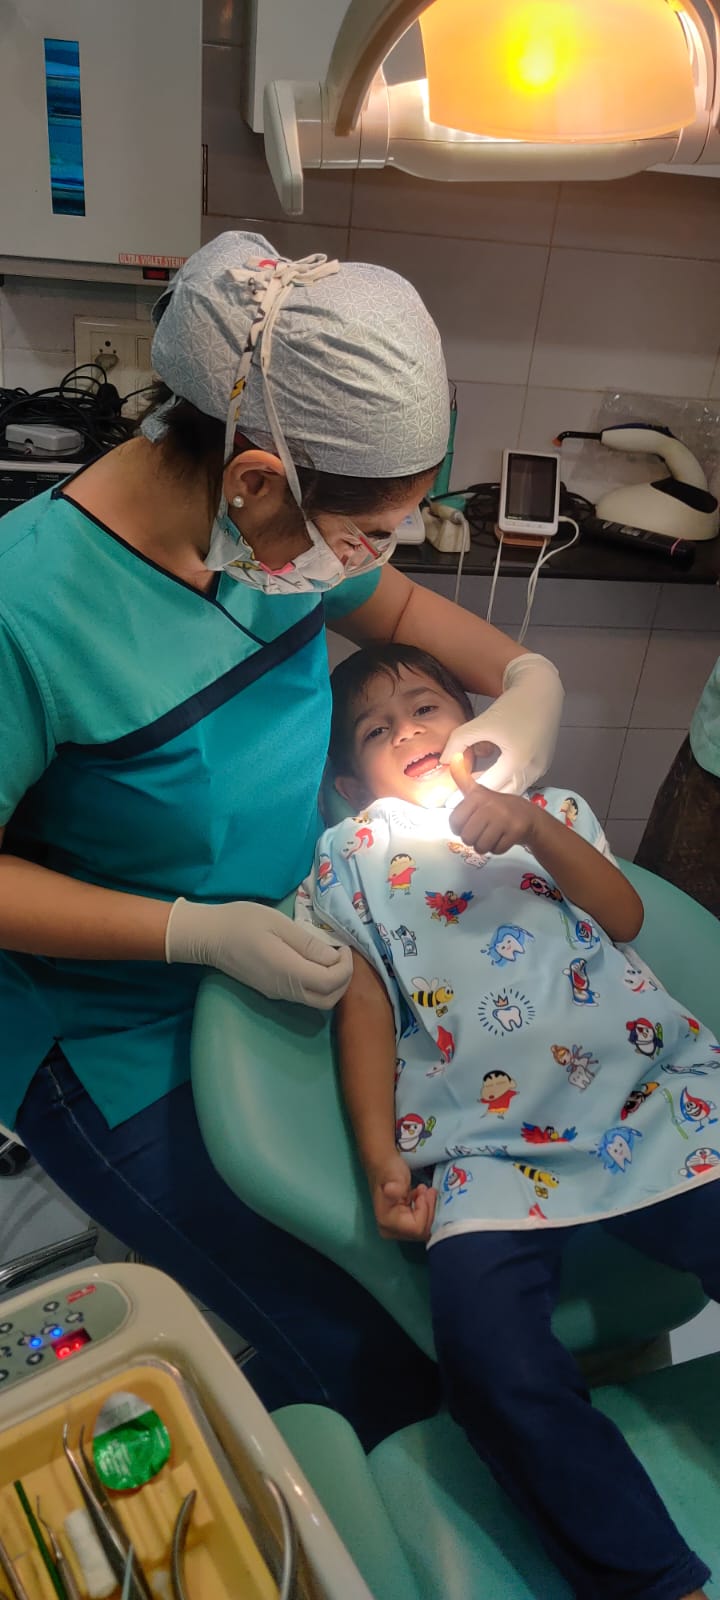 next door Pediatric Dentist!